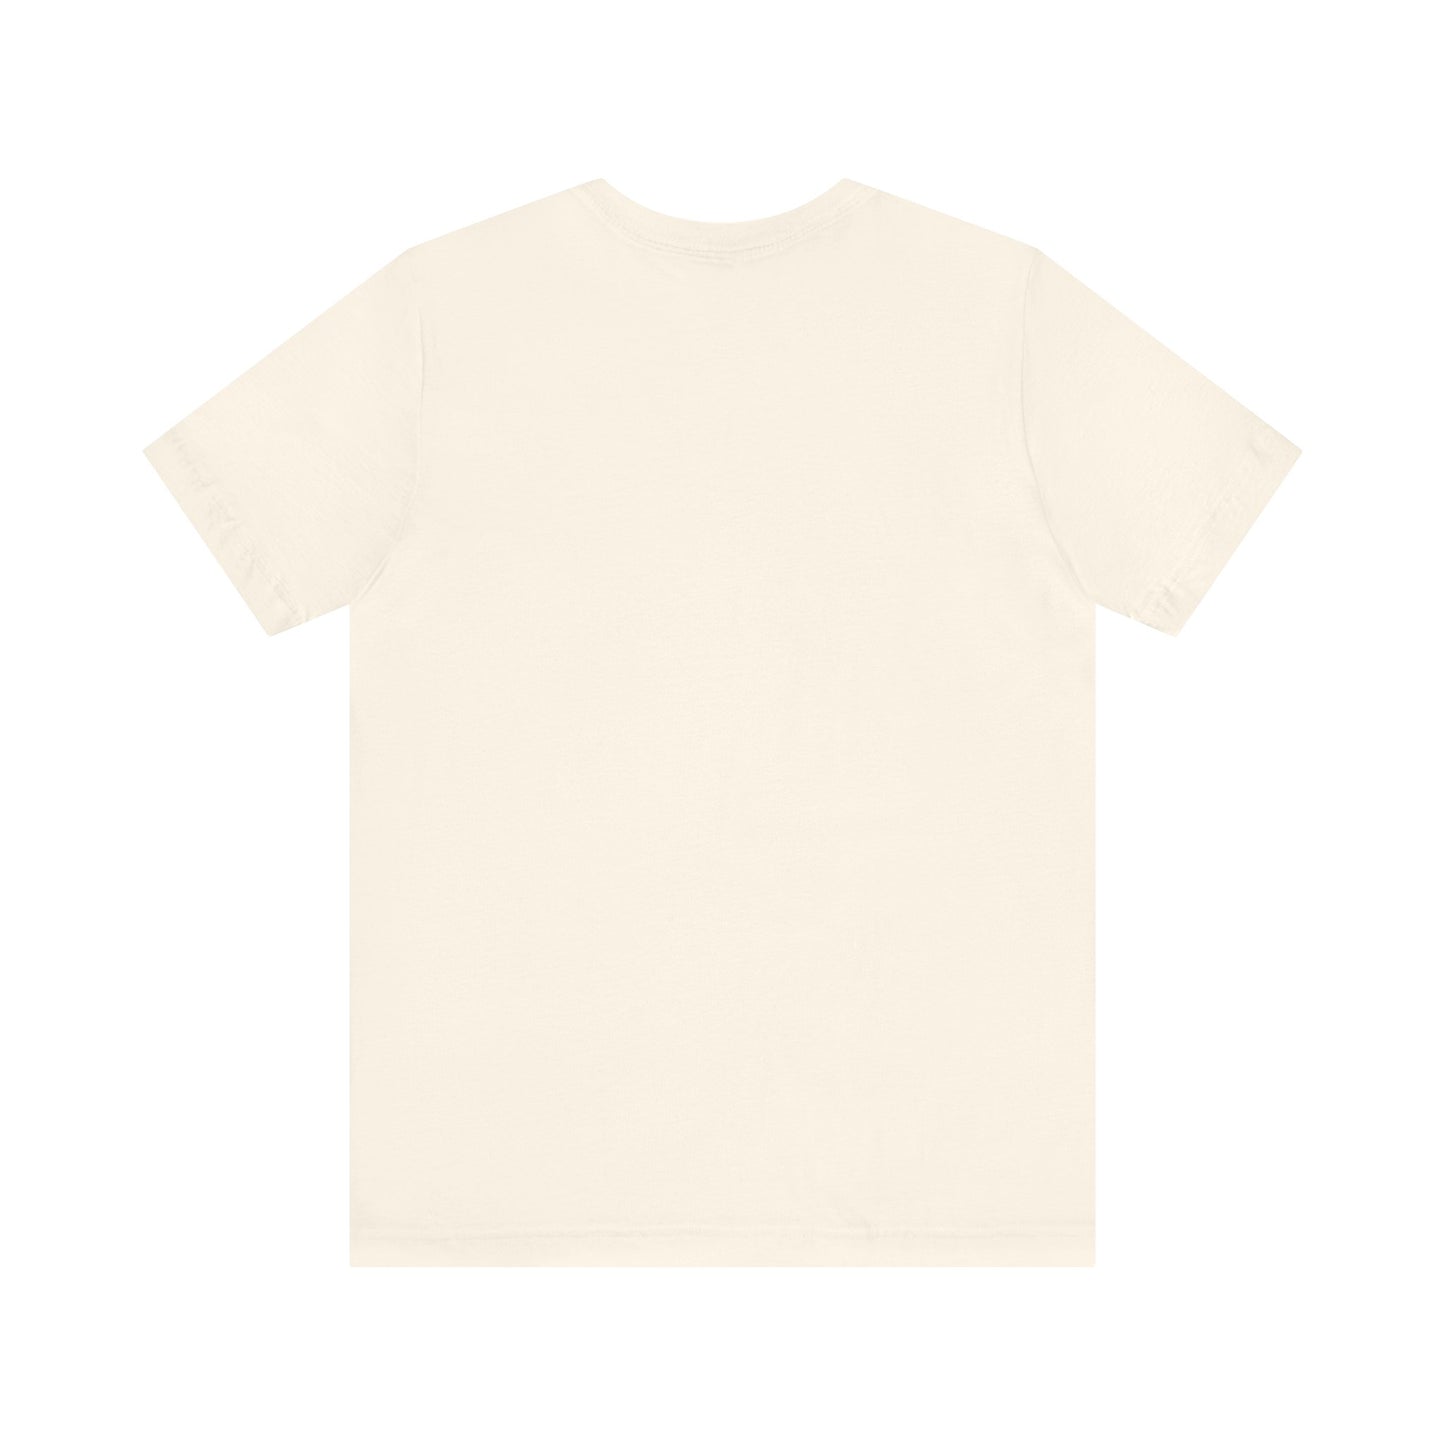 Cat MILF - Soft Unisex T-Shirt